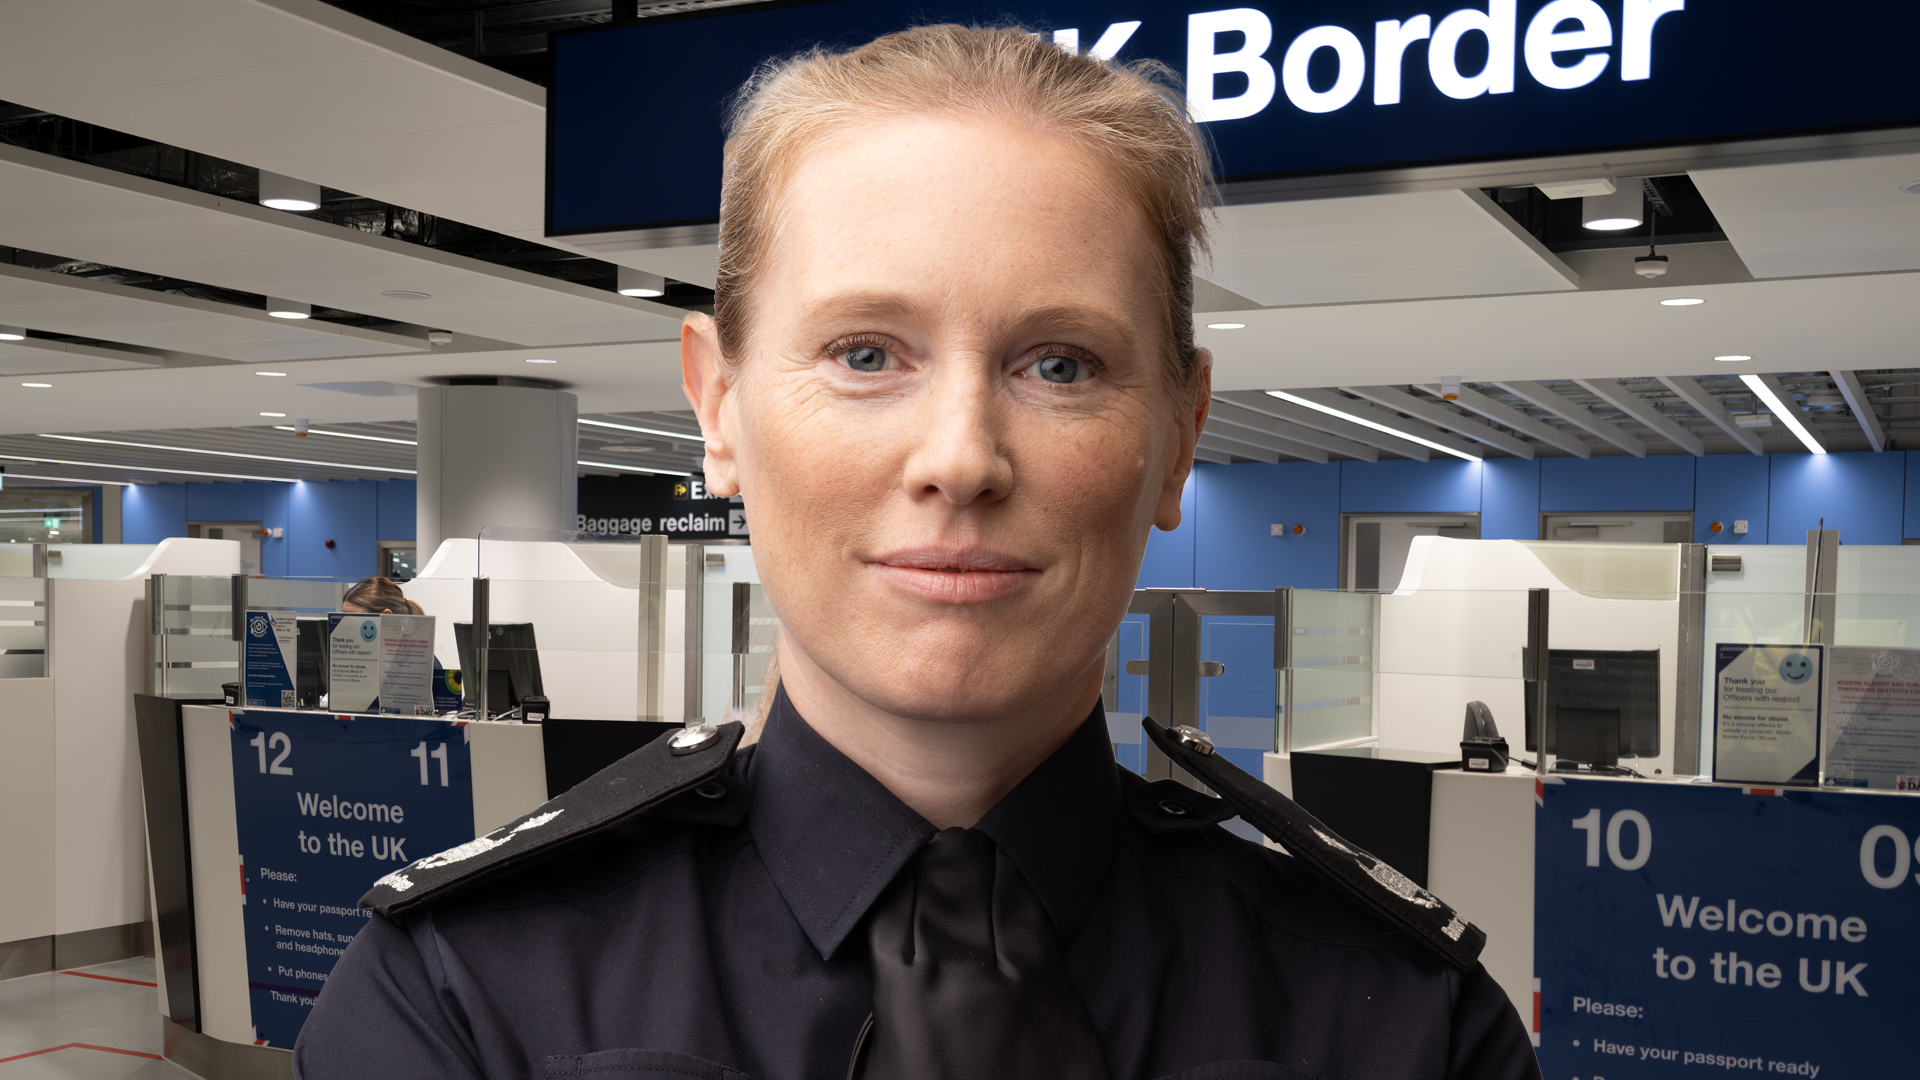 Member of Border Force staff, Katherine